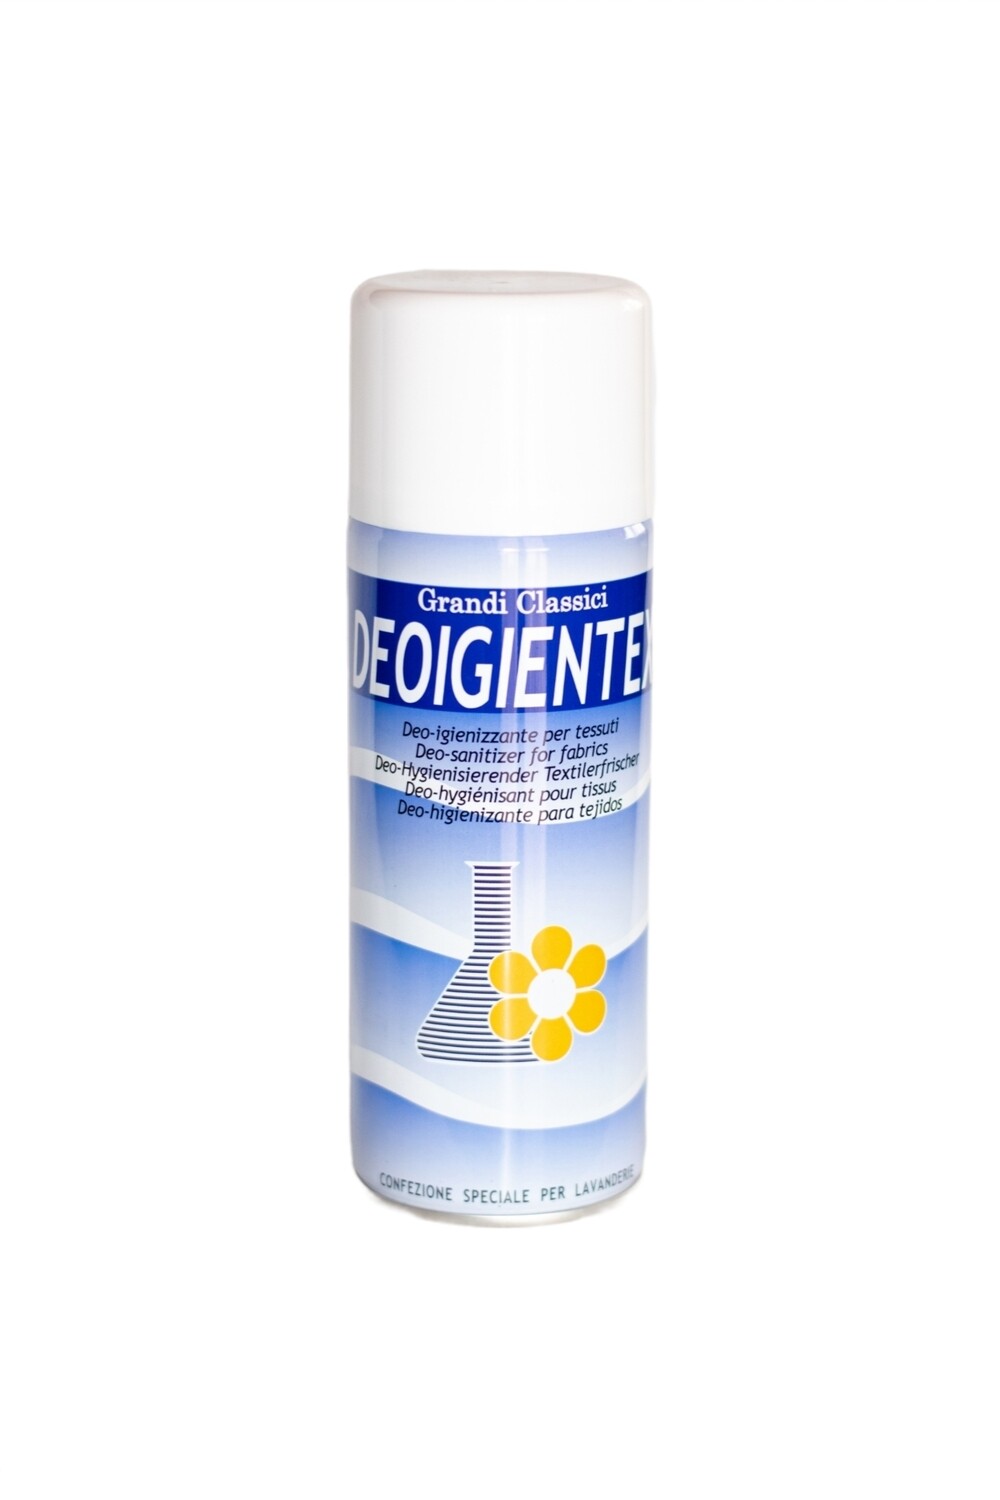 REMPI DeoIgientex - Deodorante Spray Igienizzante Igiensoft Professionale  Tessuti e Ambiente 400 ml